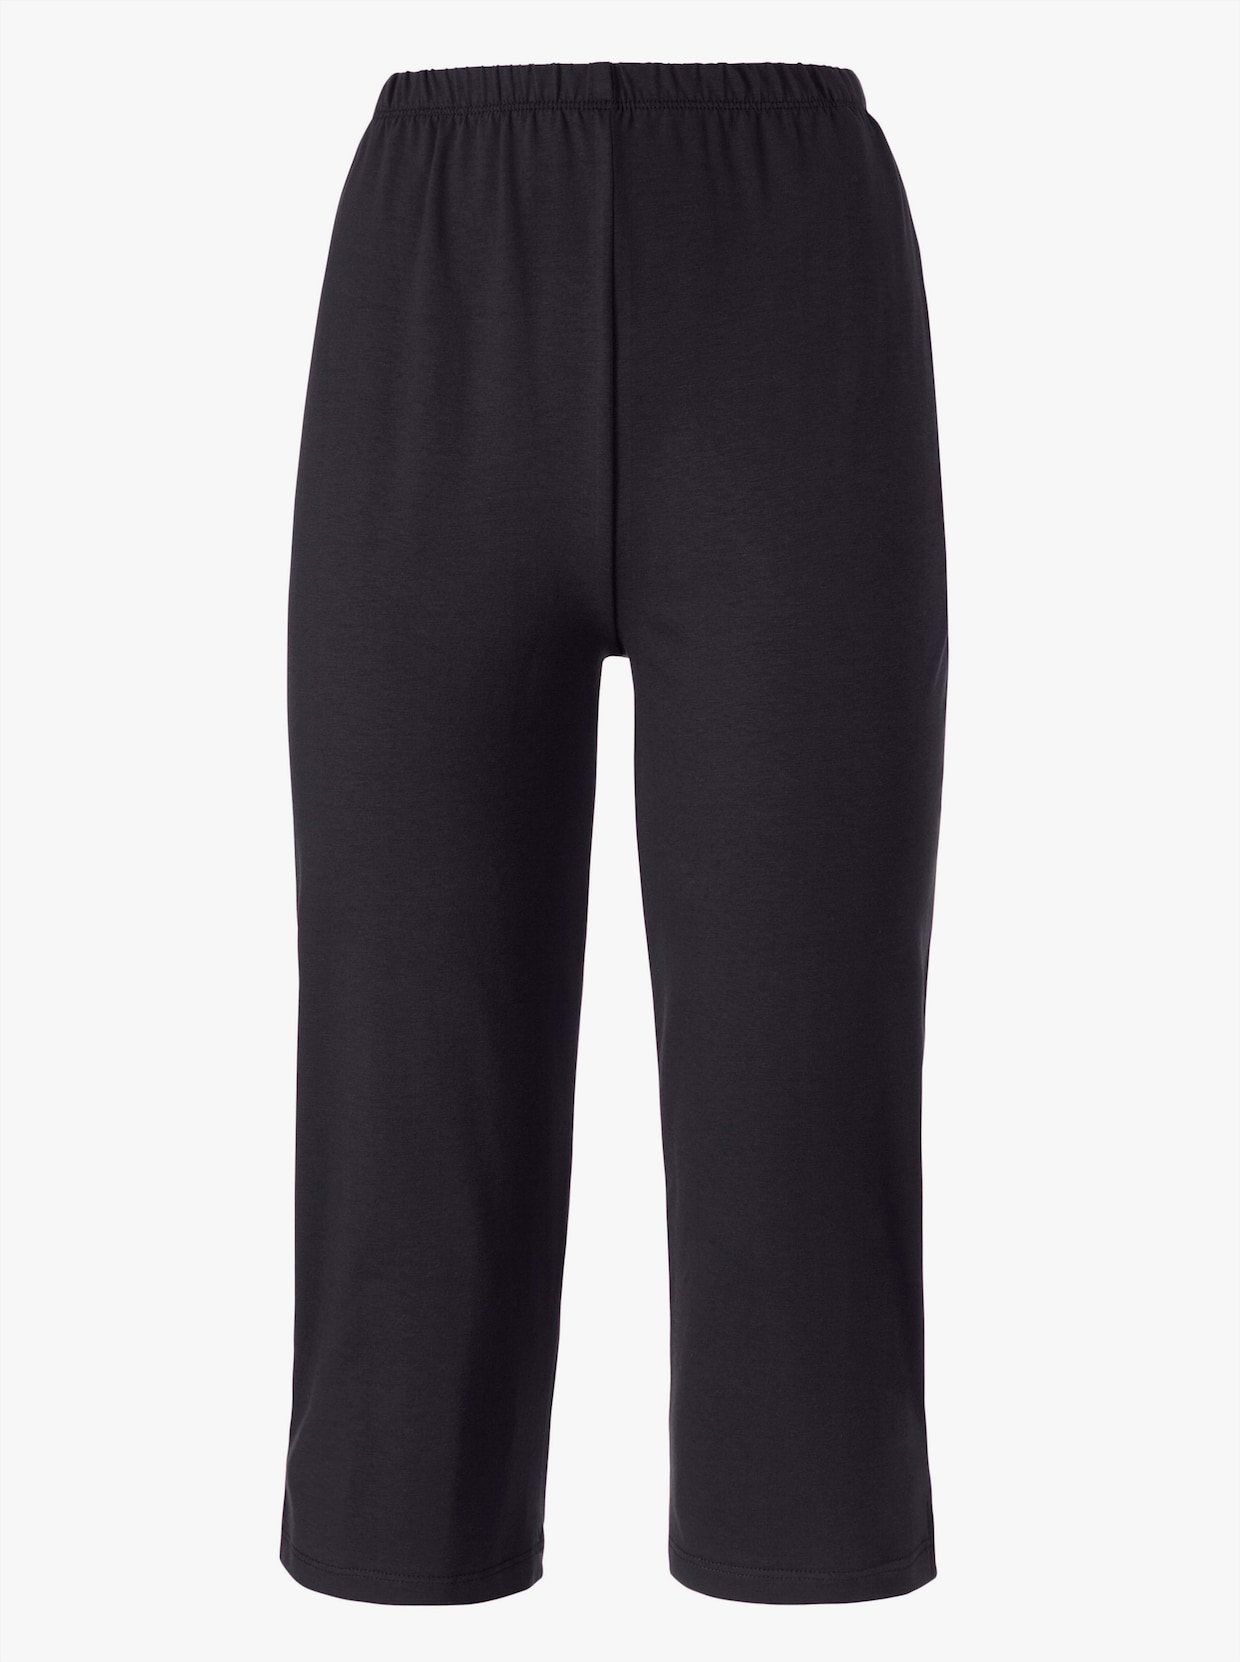 feel good Capri kalhoty - černá + šedá-melír